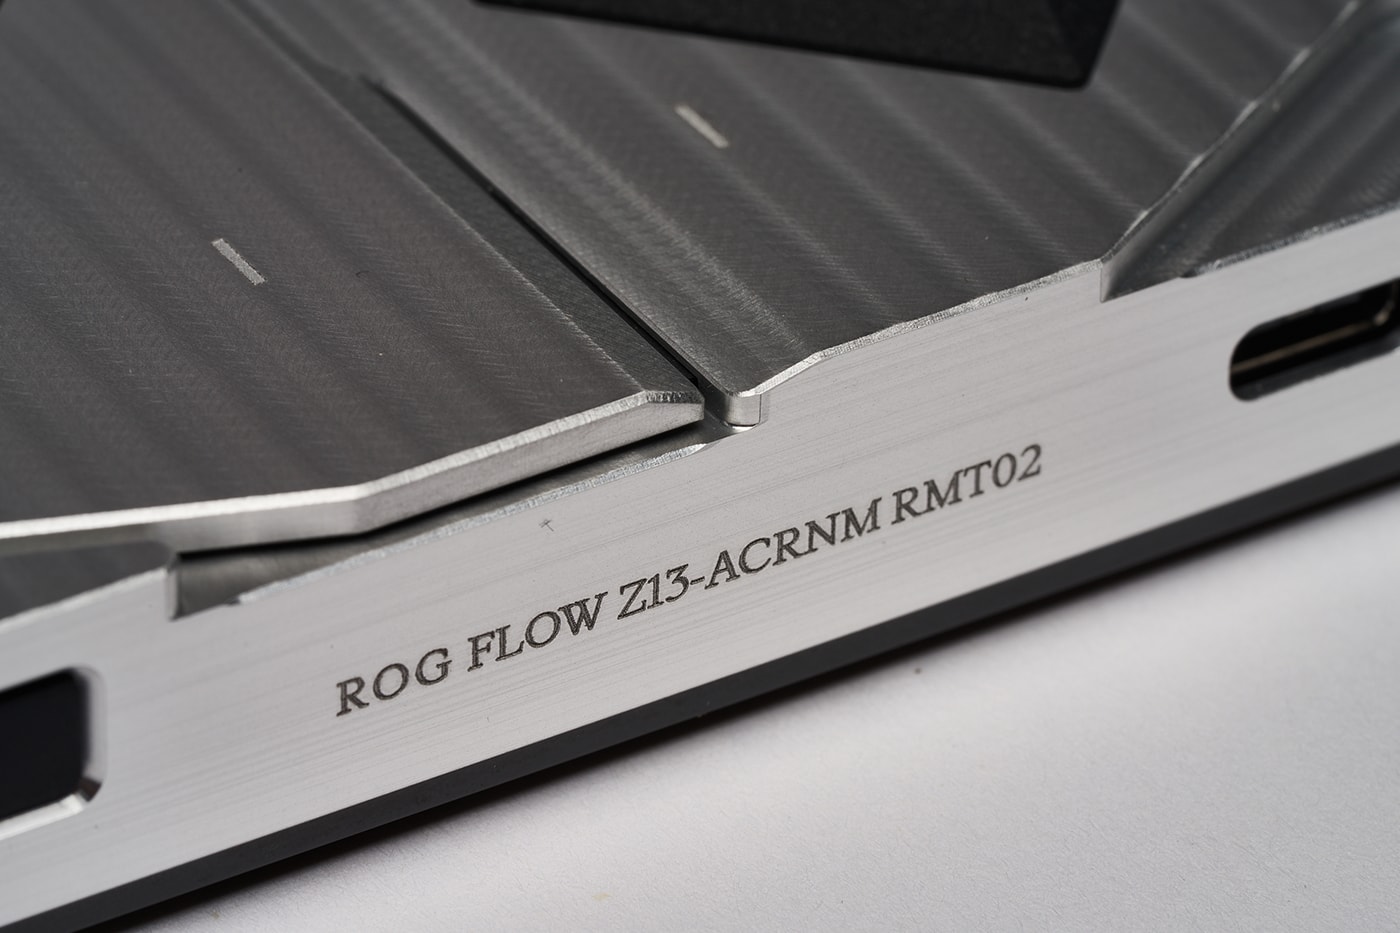 ACRONYM x ASUS ROG Flow Z13-ACRNM RMT02